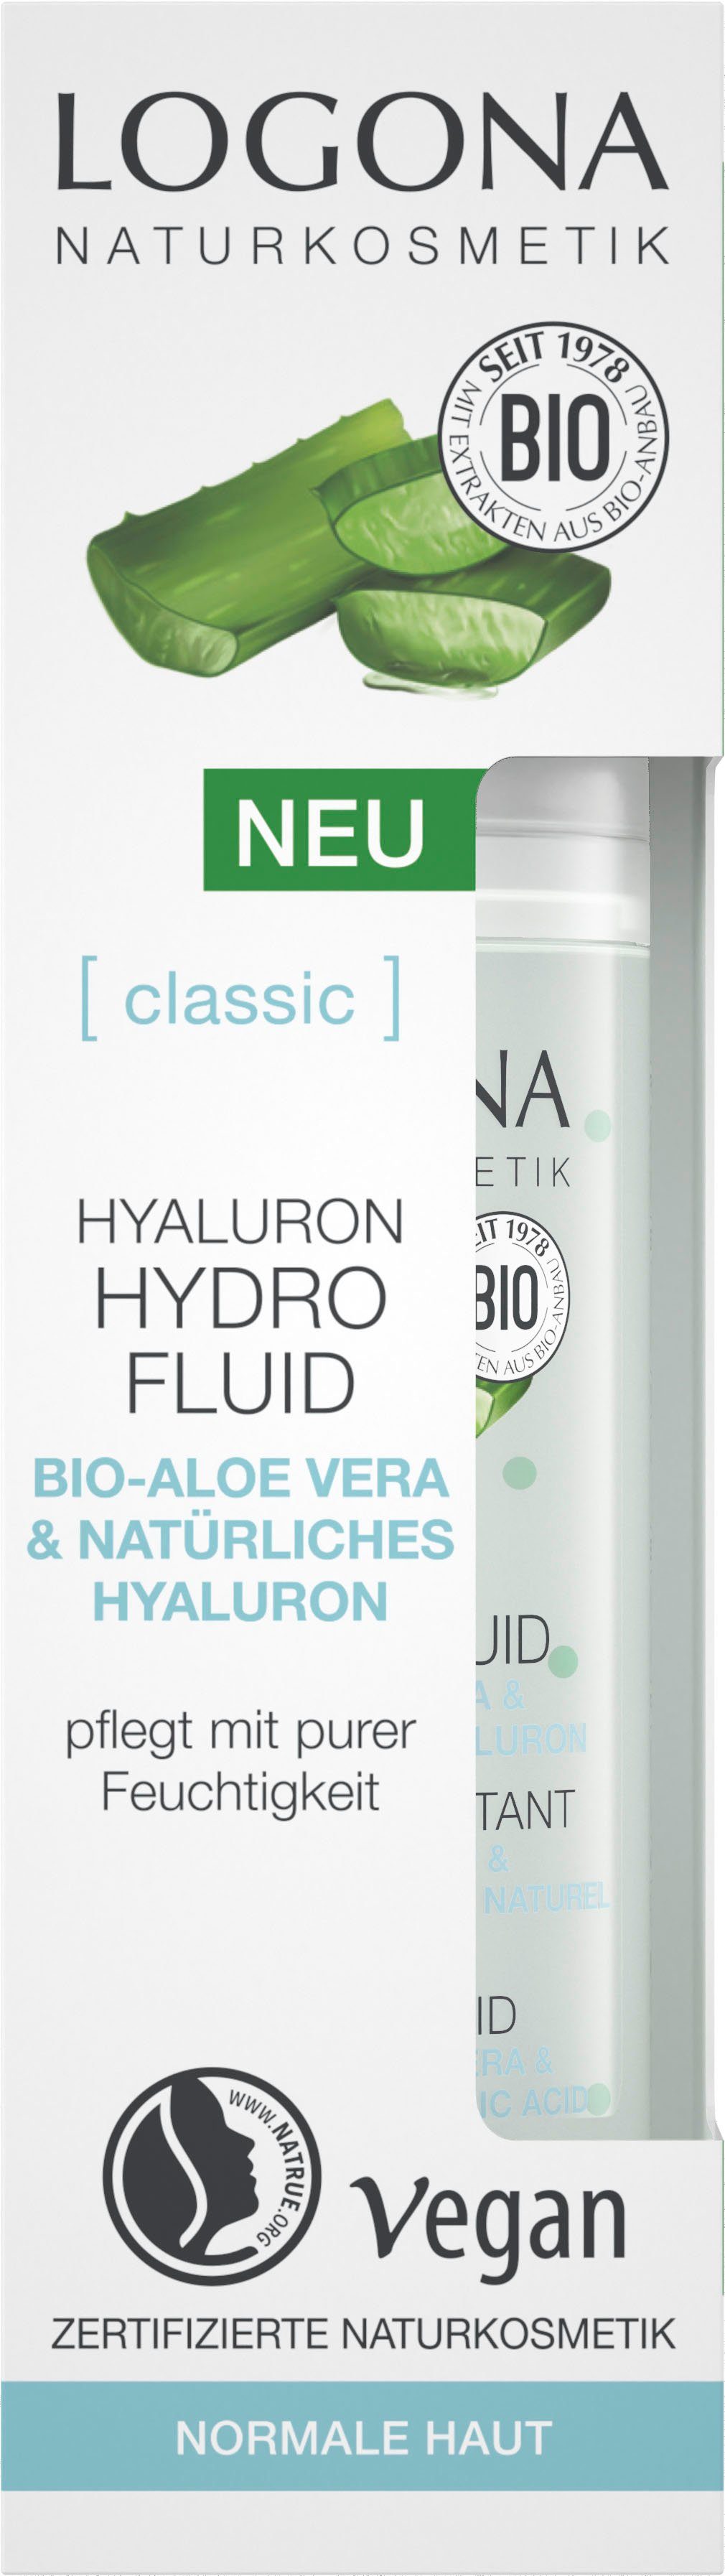 LOGONA Gesichtsfluid Hydro Fluid Logona Hyaluron [classic